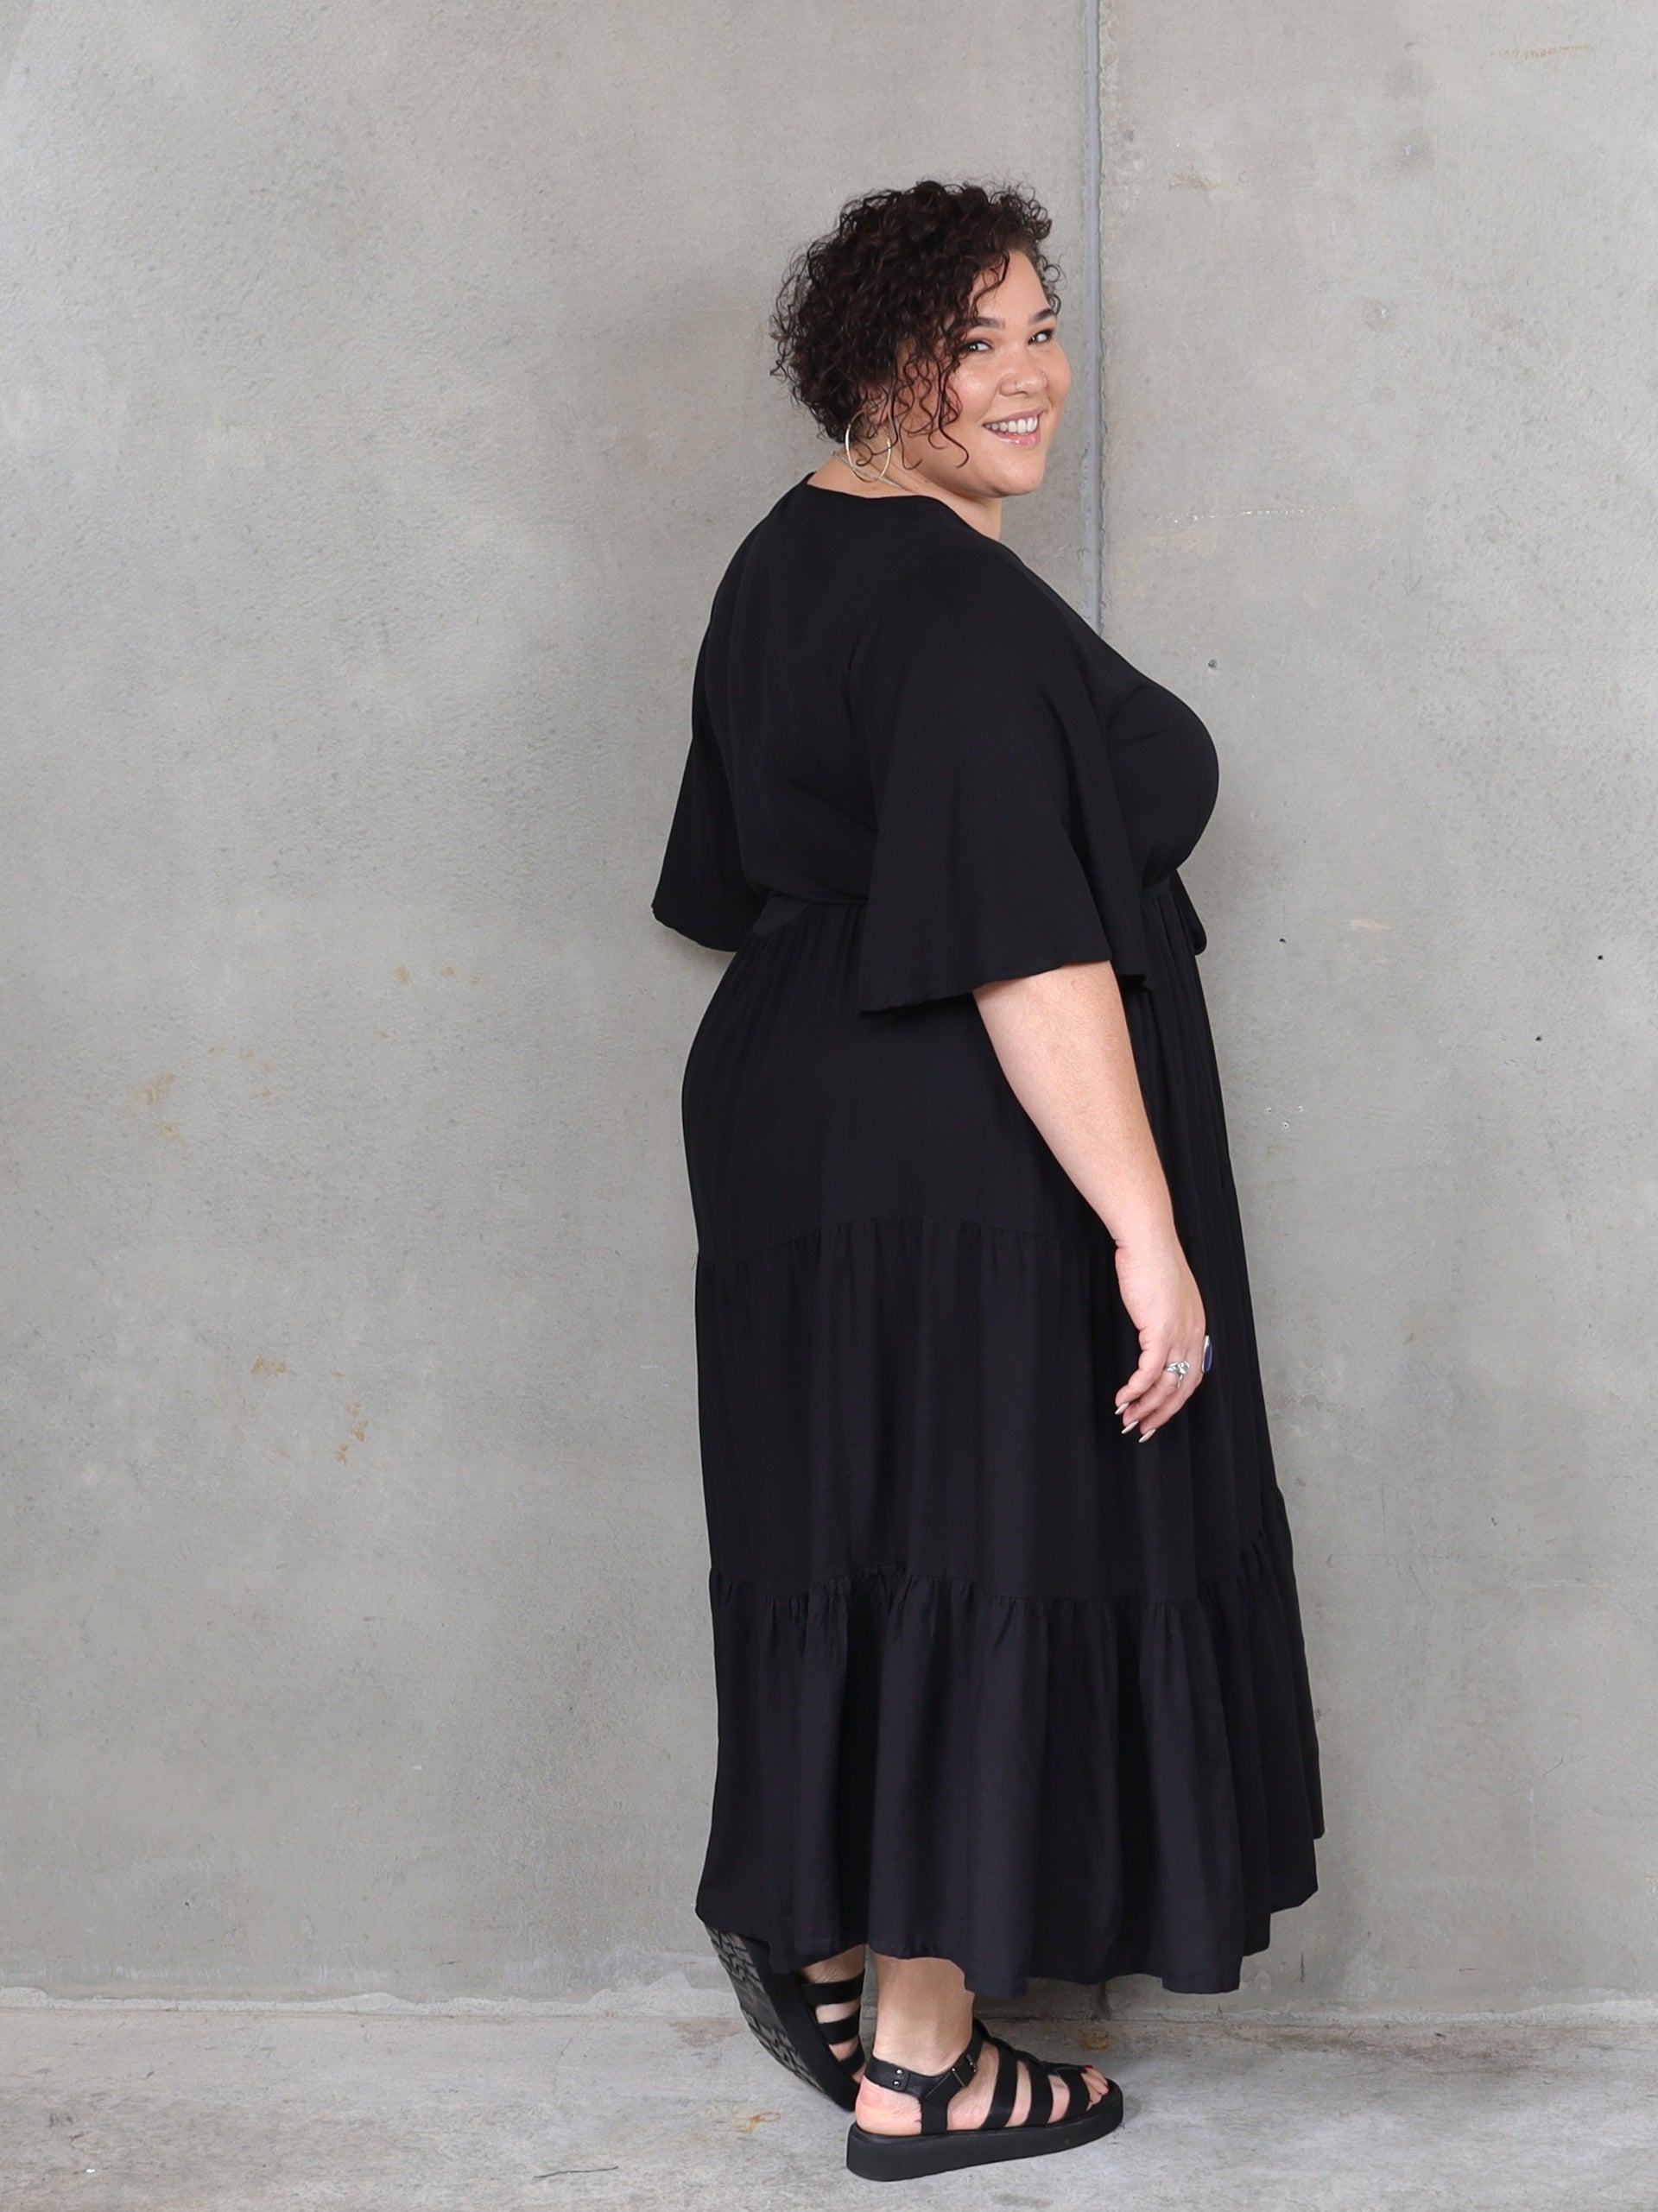 Isla Maree Jasmine Dress - Black | NZ Womens Plus Size Fashion – Isla-Maree